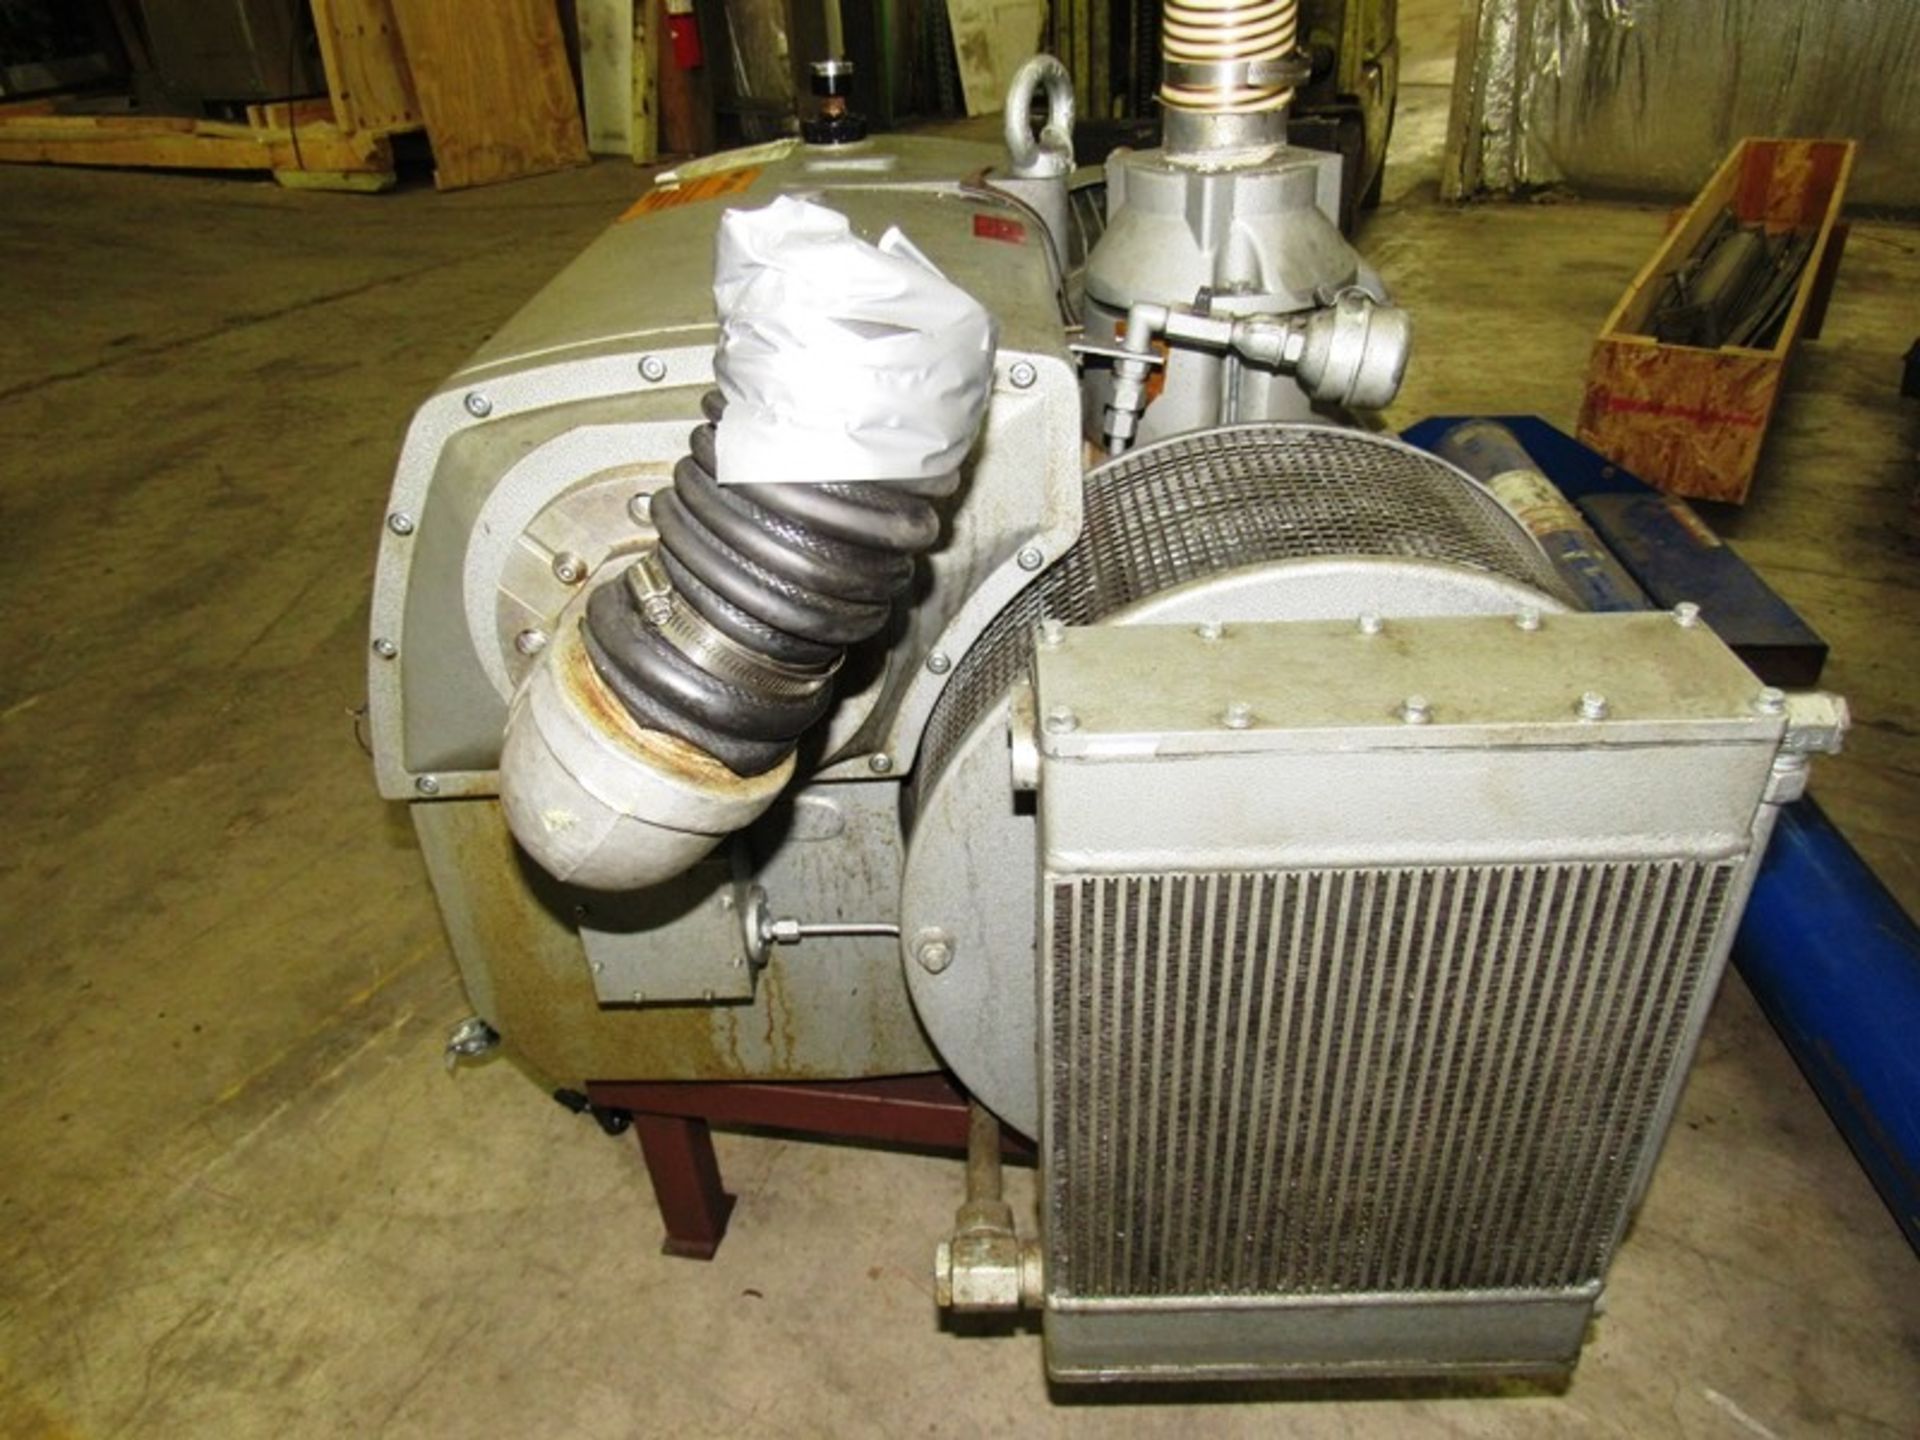 Busch Mdl. RA0502B406.1001 Vacuum Pump 20h.p. Baldor motor, 230/460 volts, 3 phase, displacement 413 - Image 5 of 6